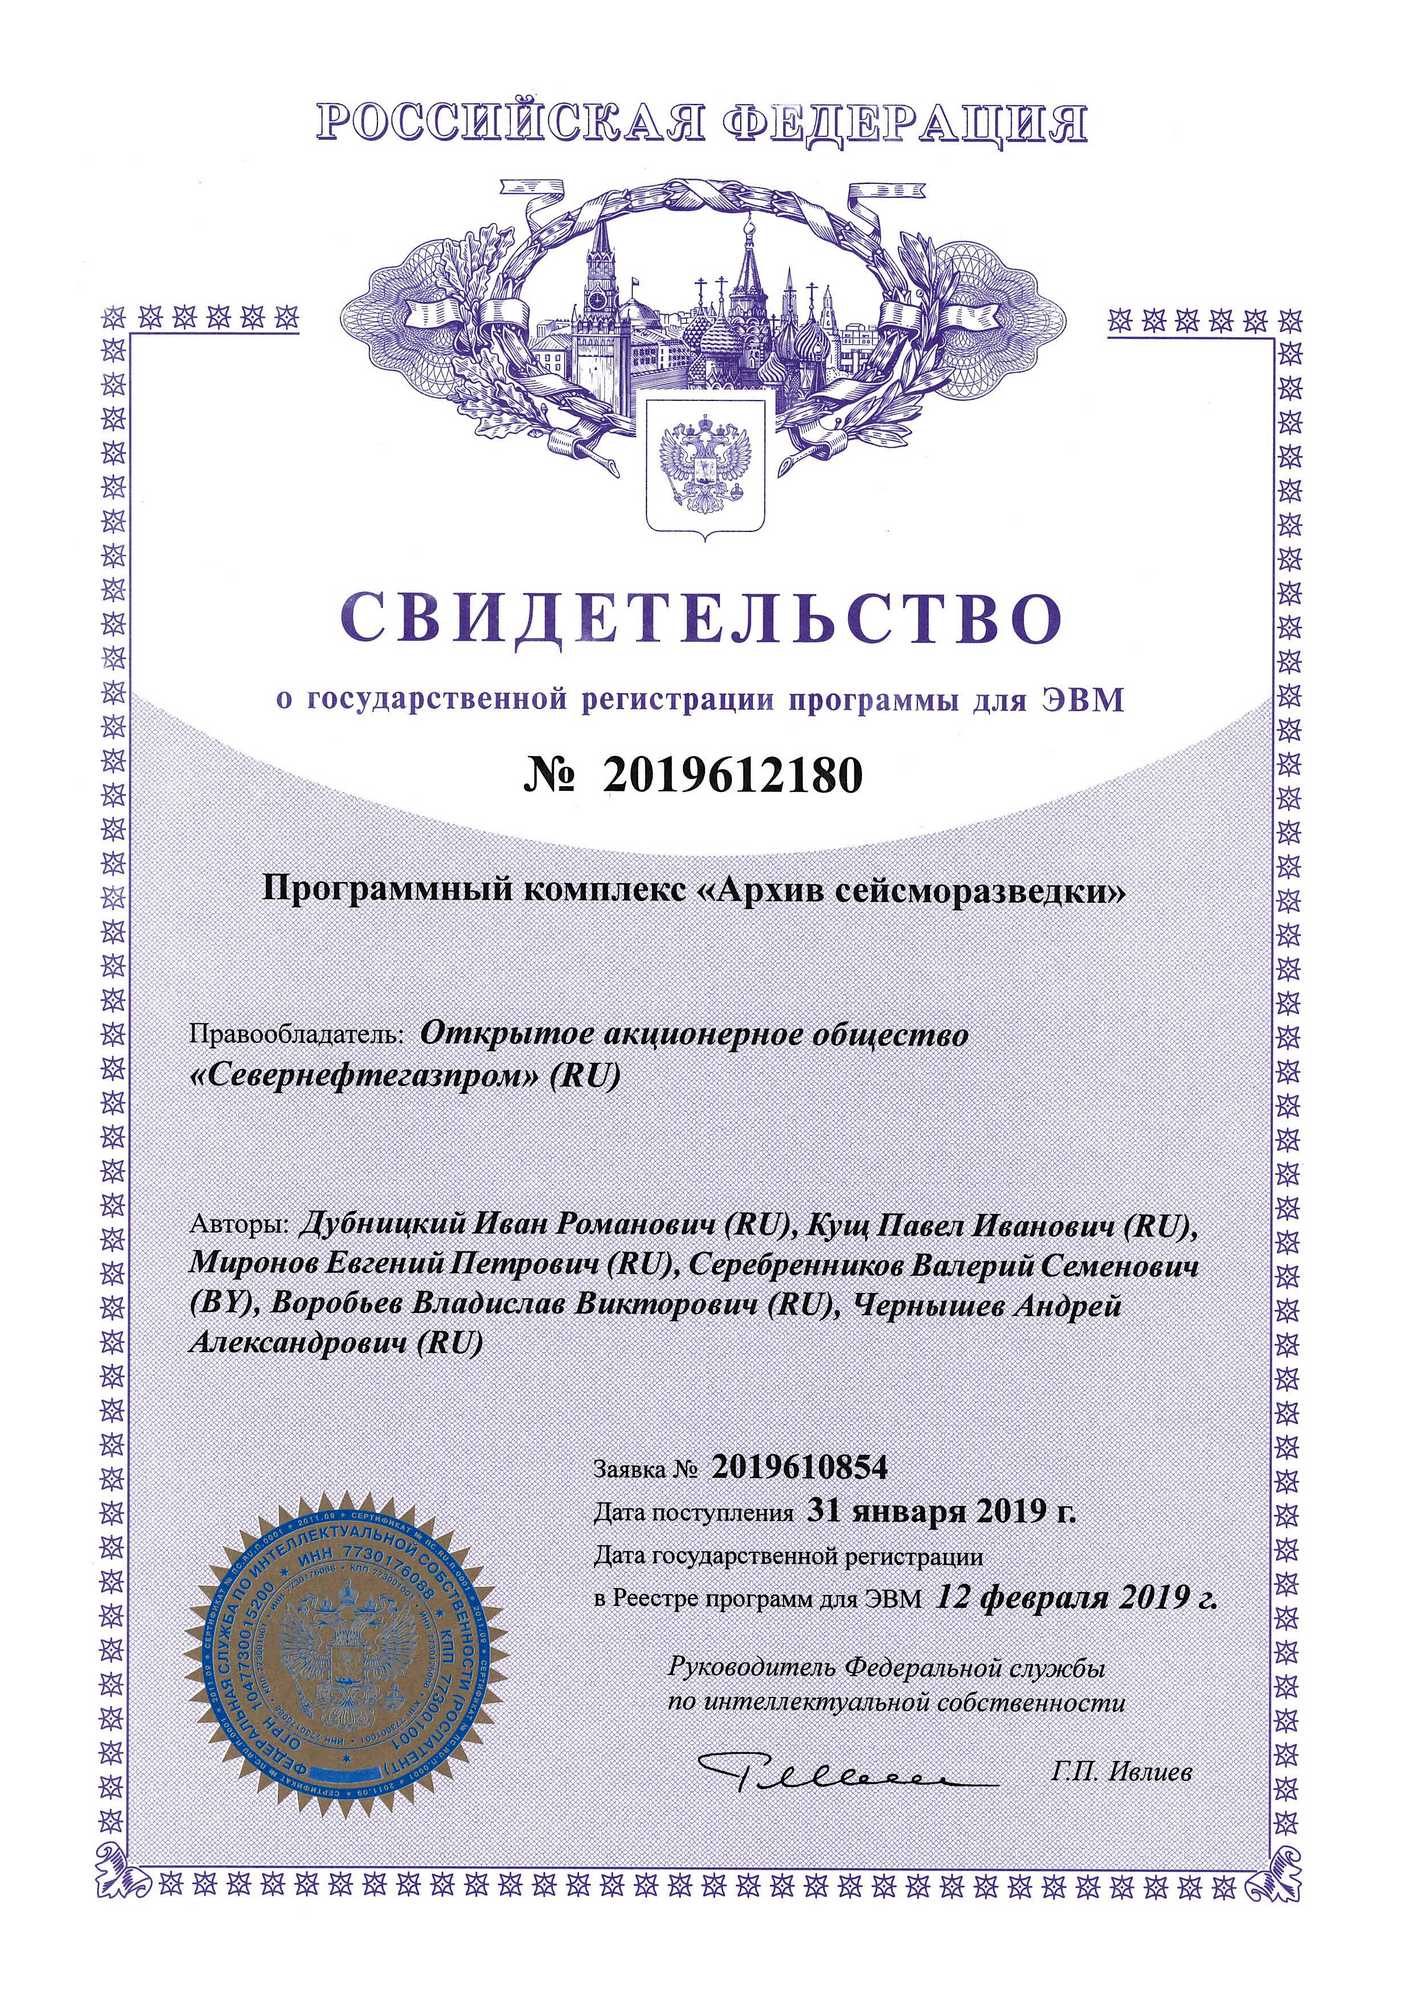 Certificate of state registration of computer program №2019612180